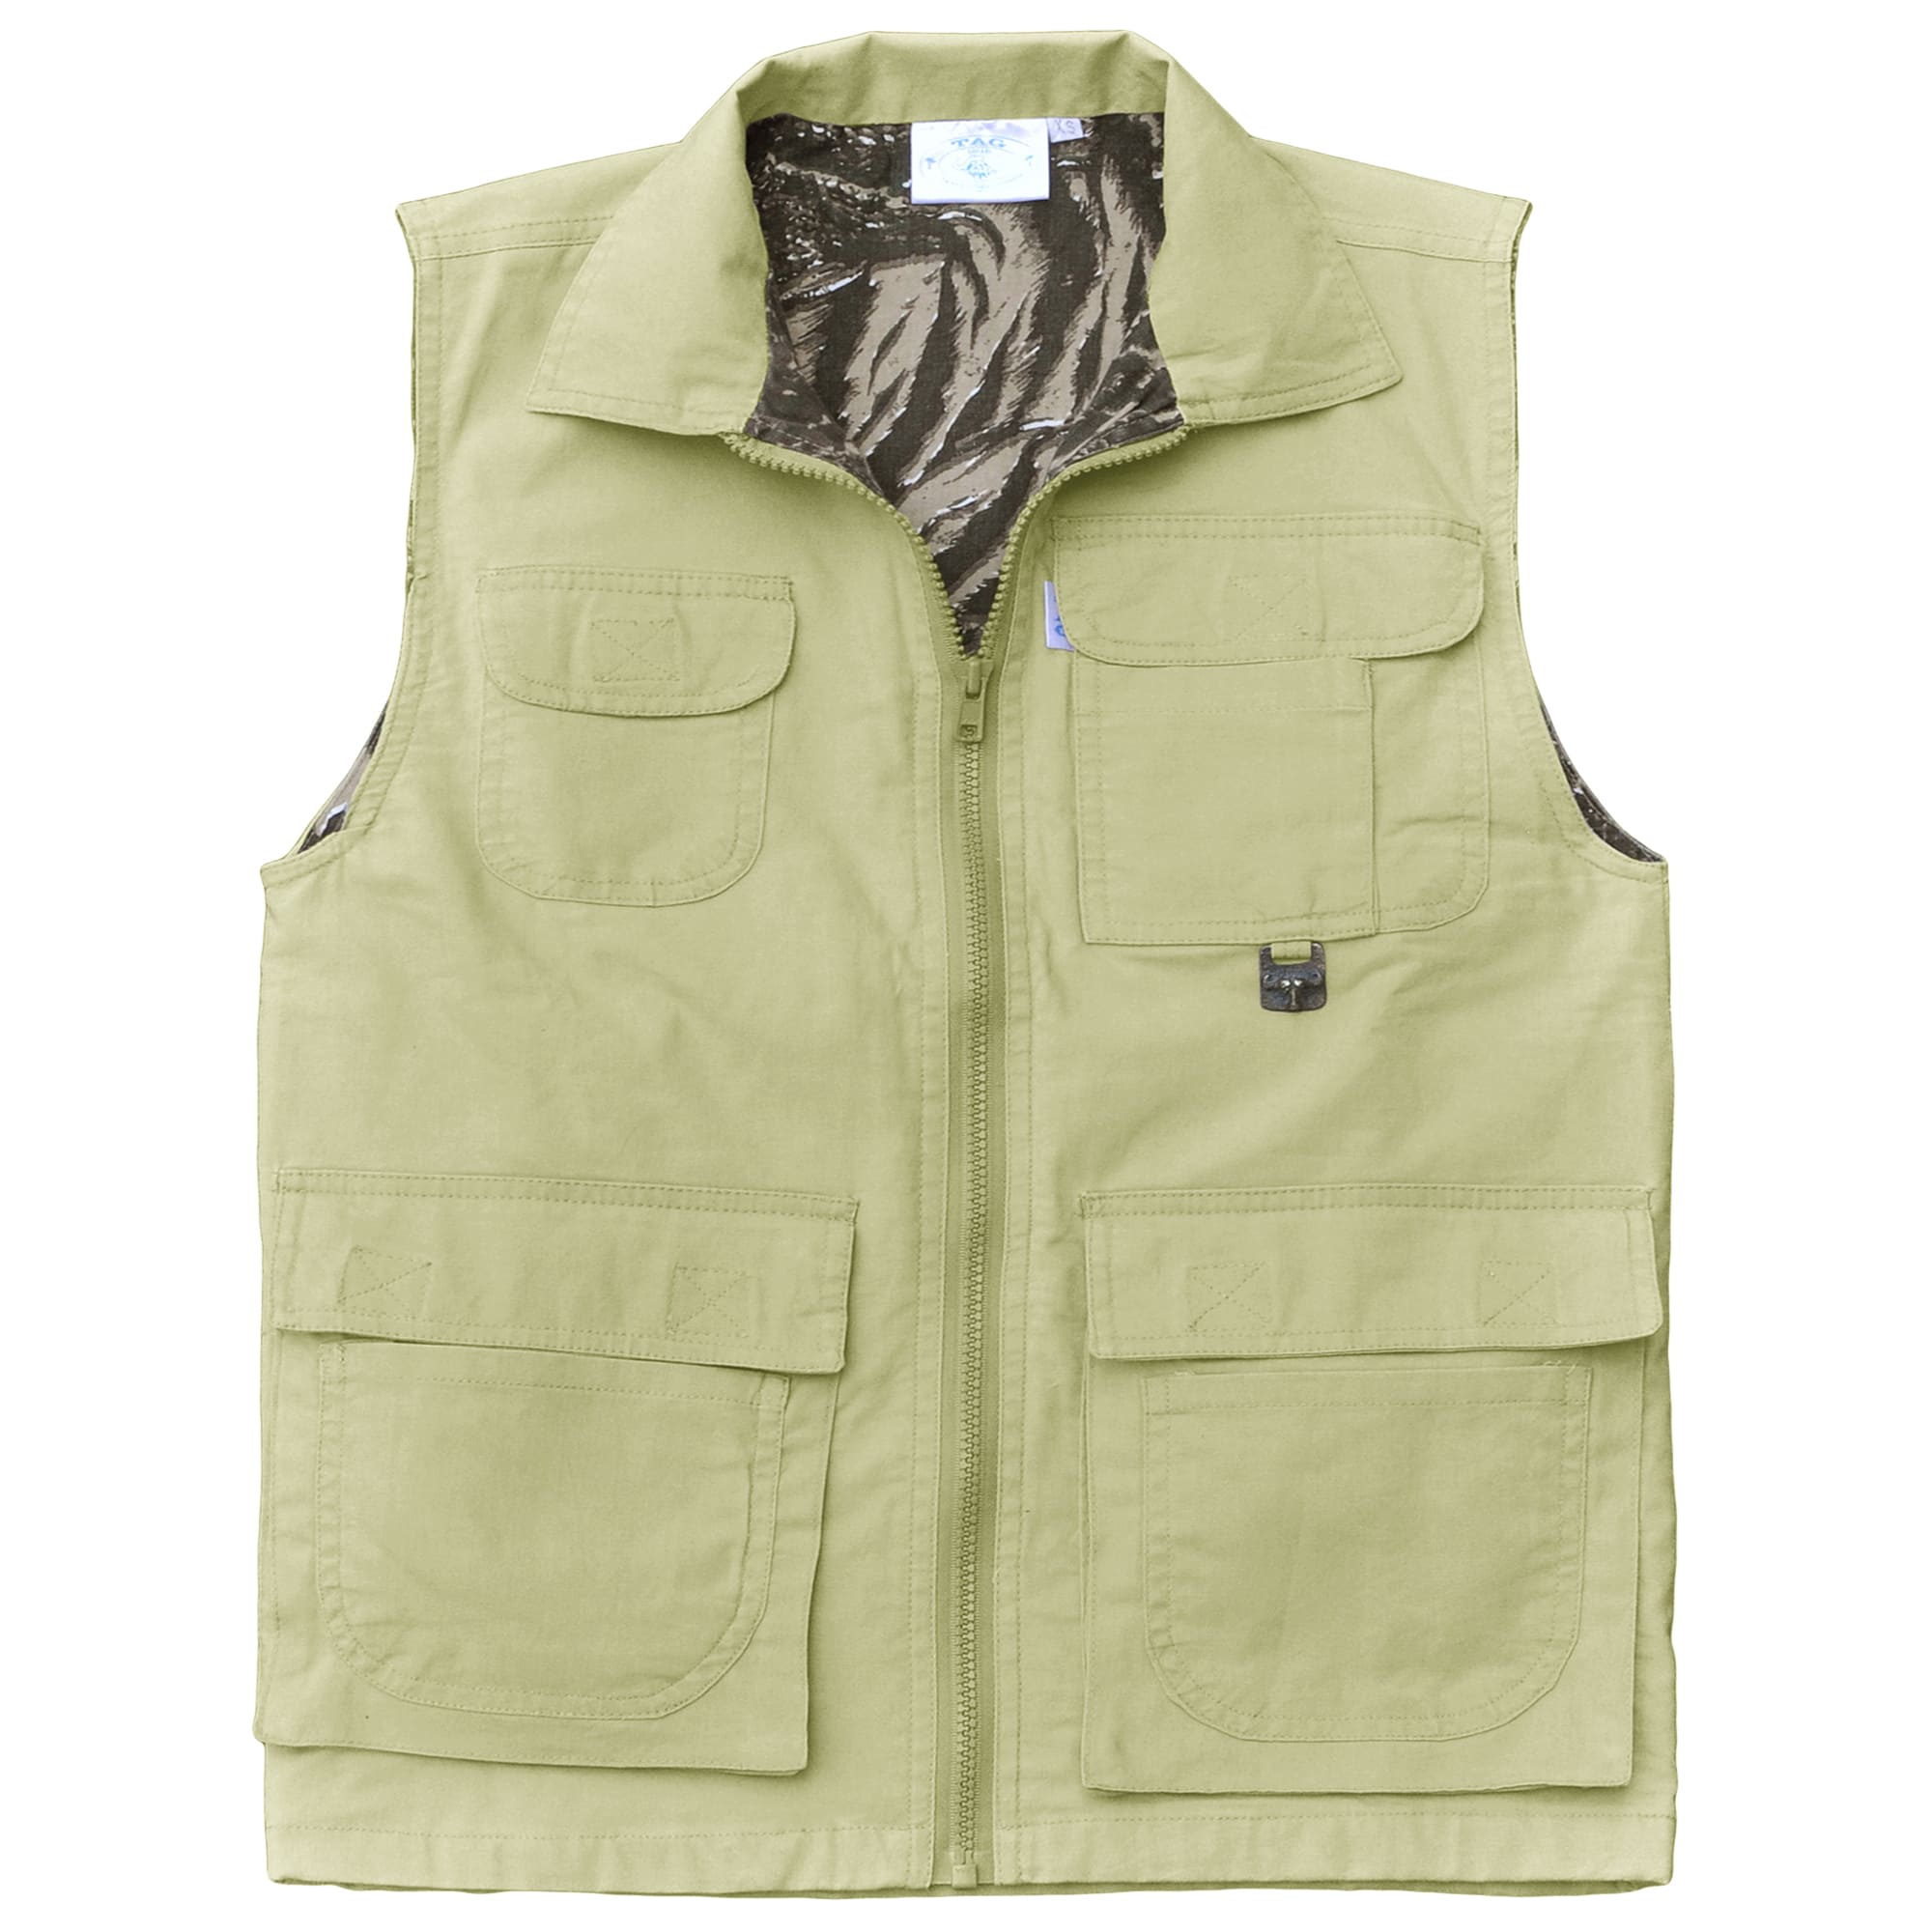 Tag Safari Women's Safari Vest with Covered Oversized Pockets (Stone, X-Small)